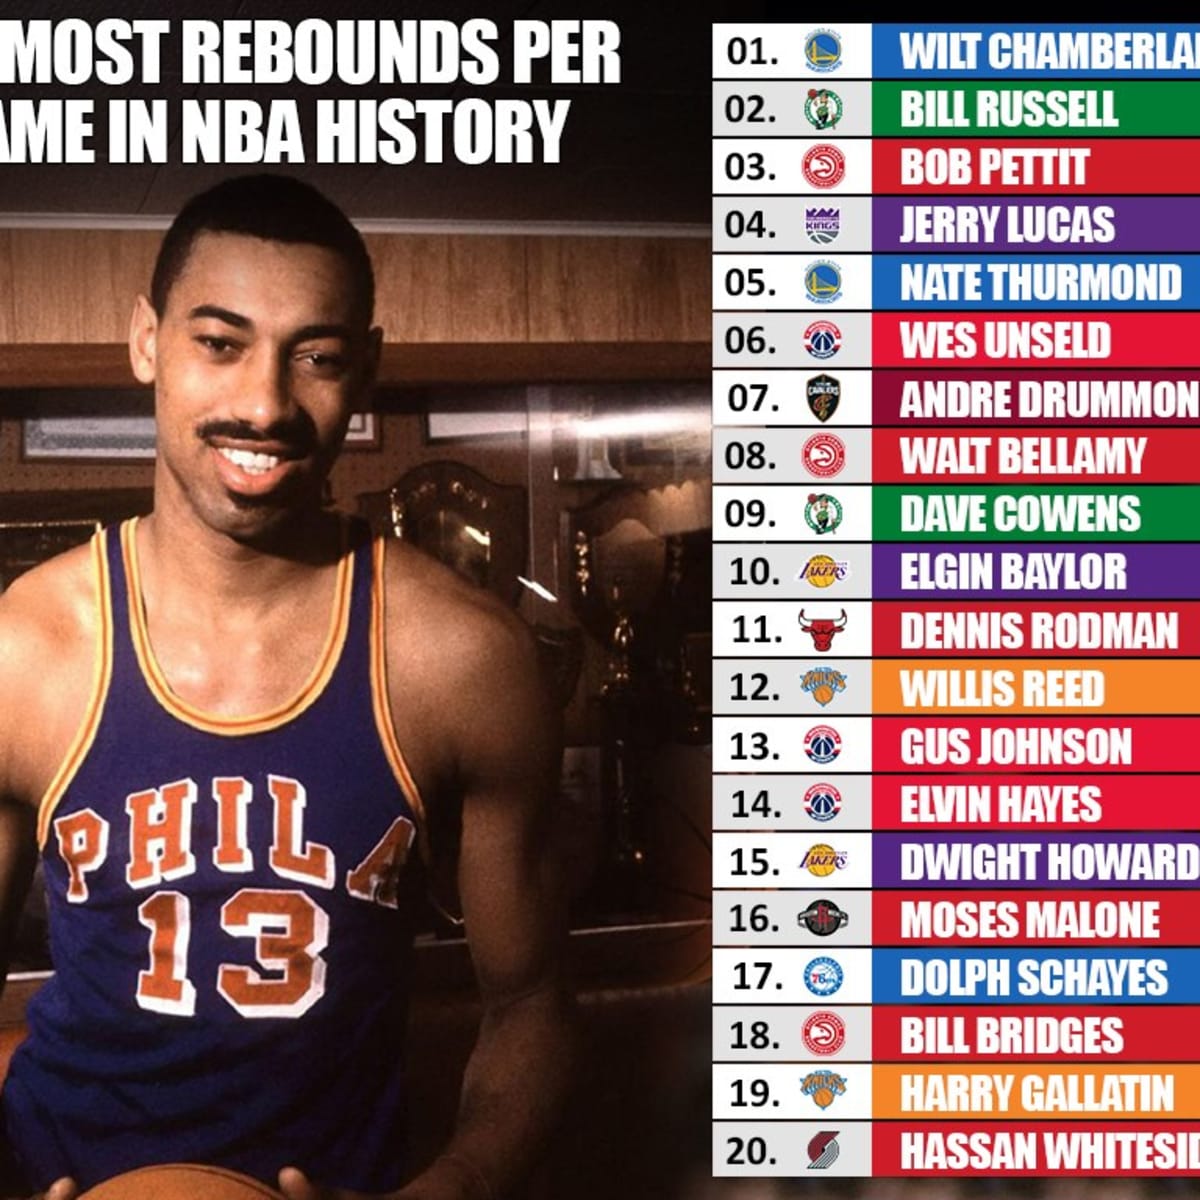 The 10 best rebounders in NBA history